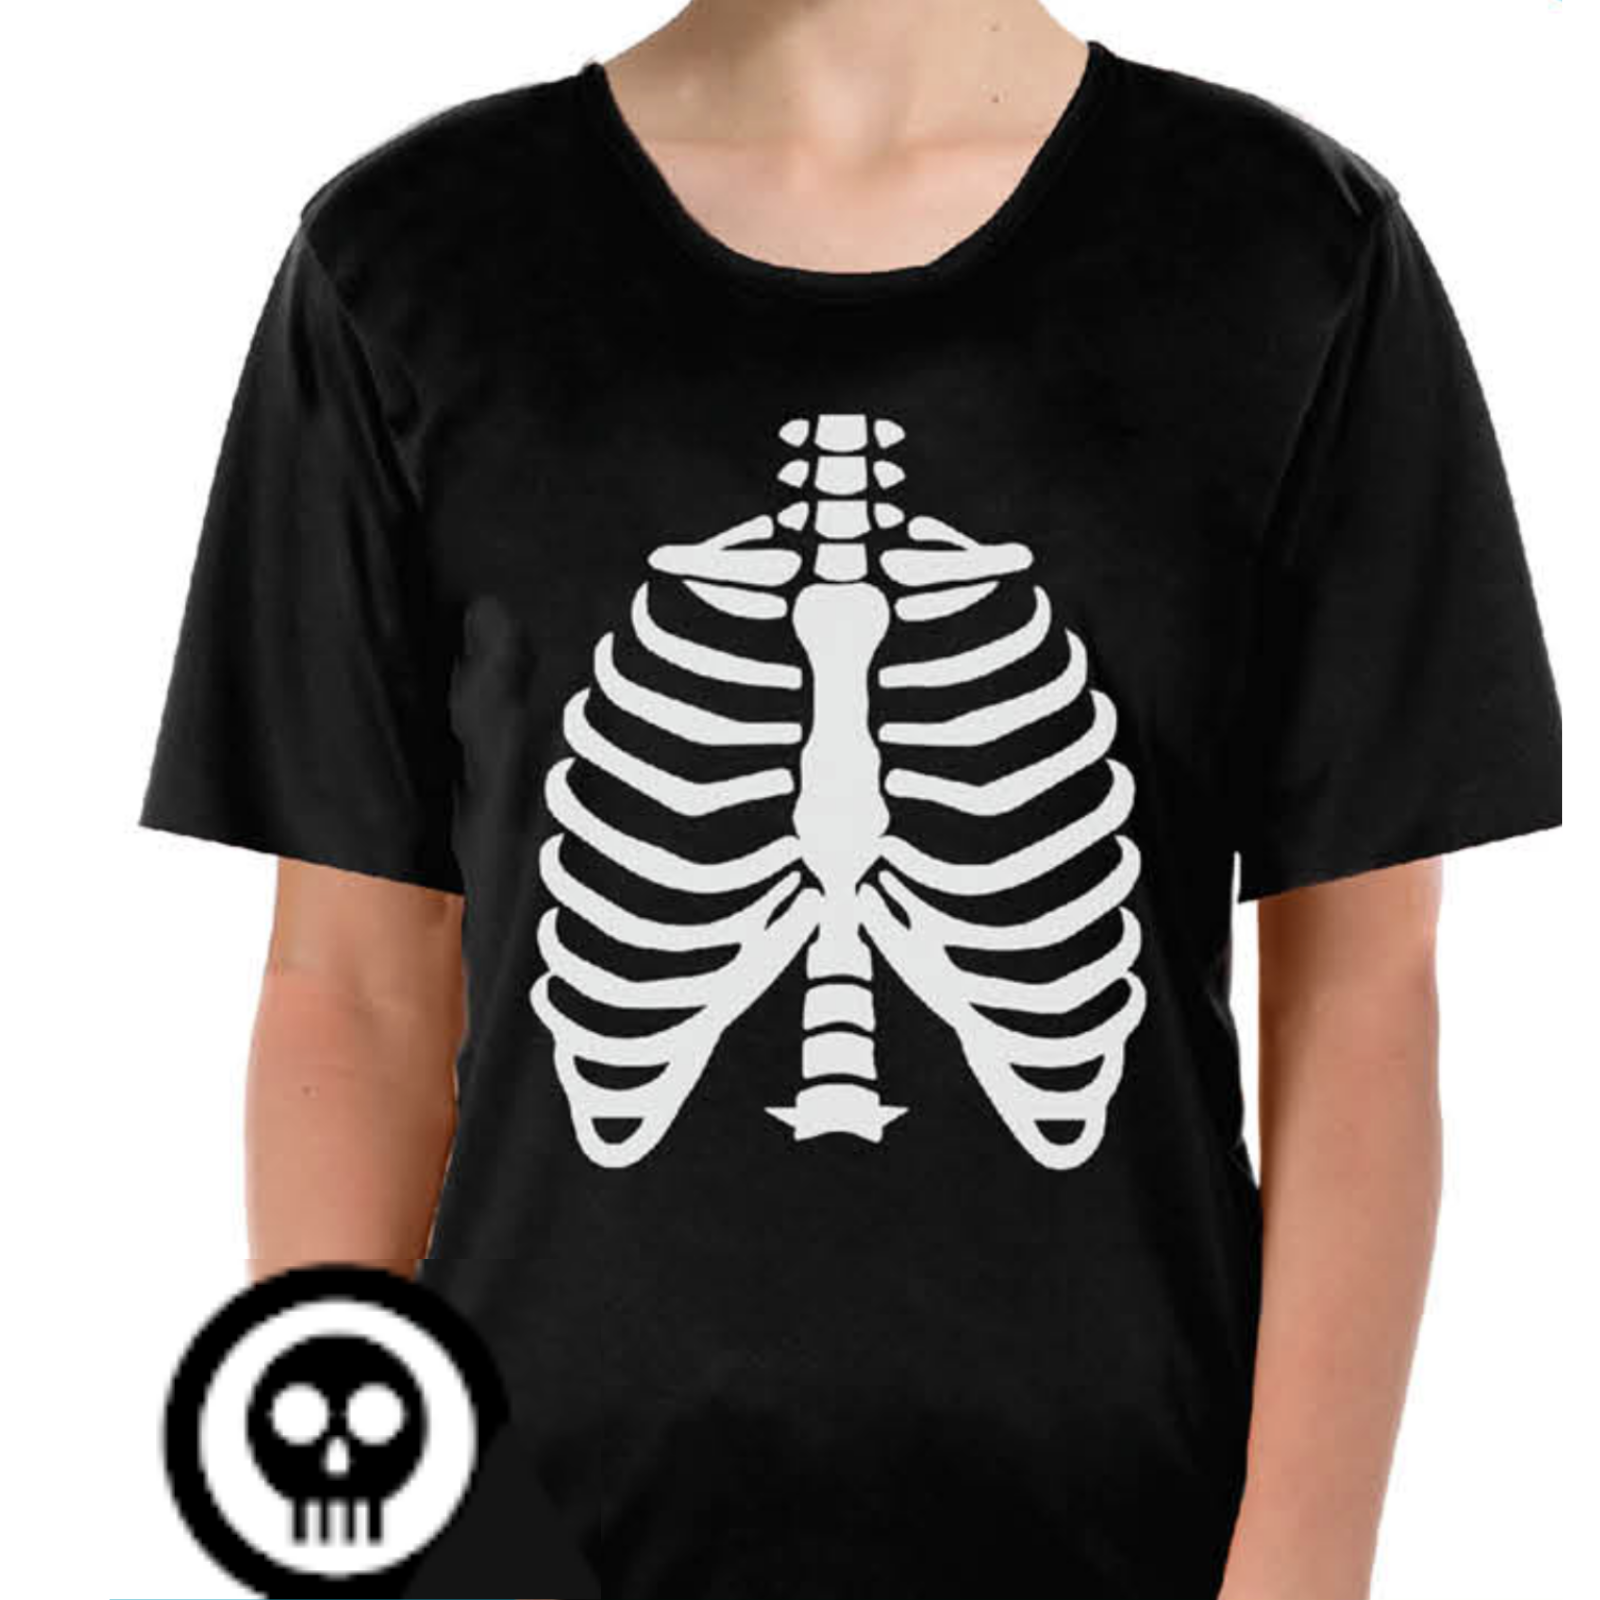 Childrens Skeleton Top Scary Kids Dress Up Halloween Book Week Bones T Shirt - M (7-9 Years Old)